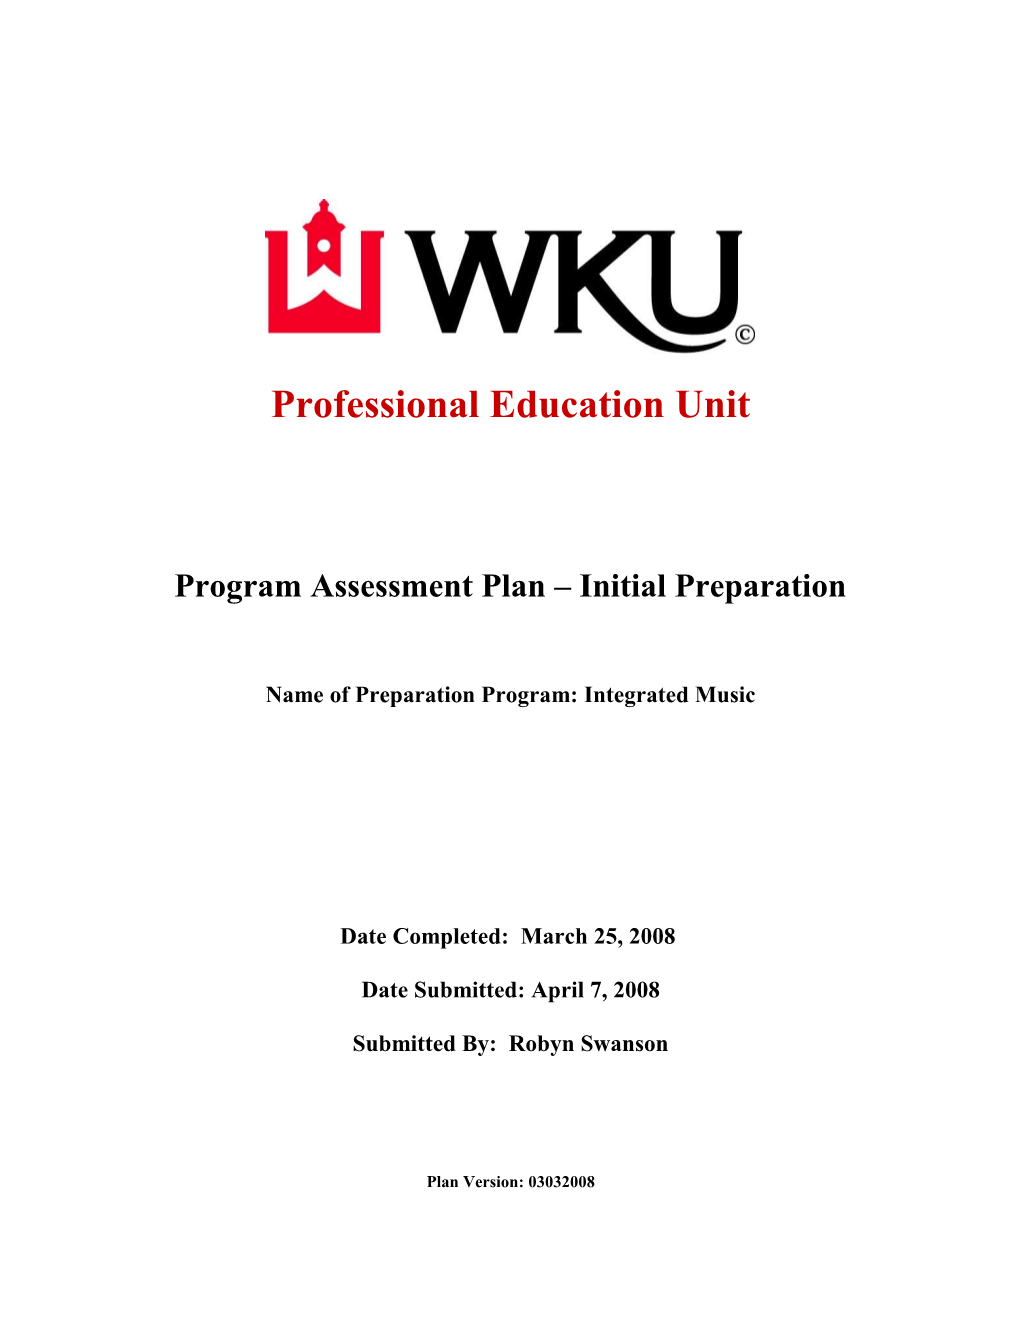 WKU Program Review Document #2 s1